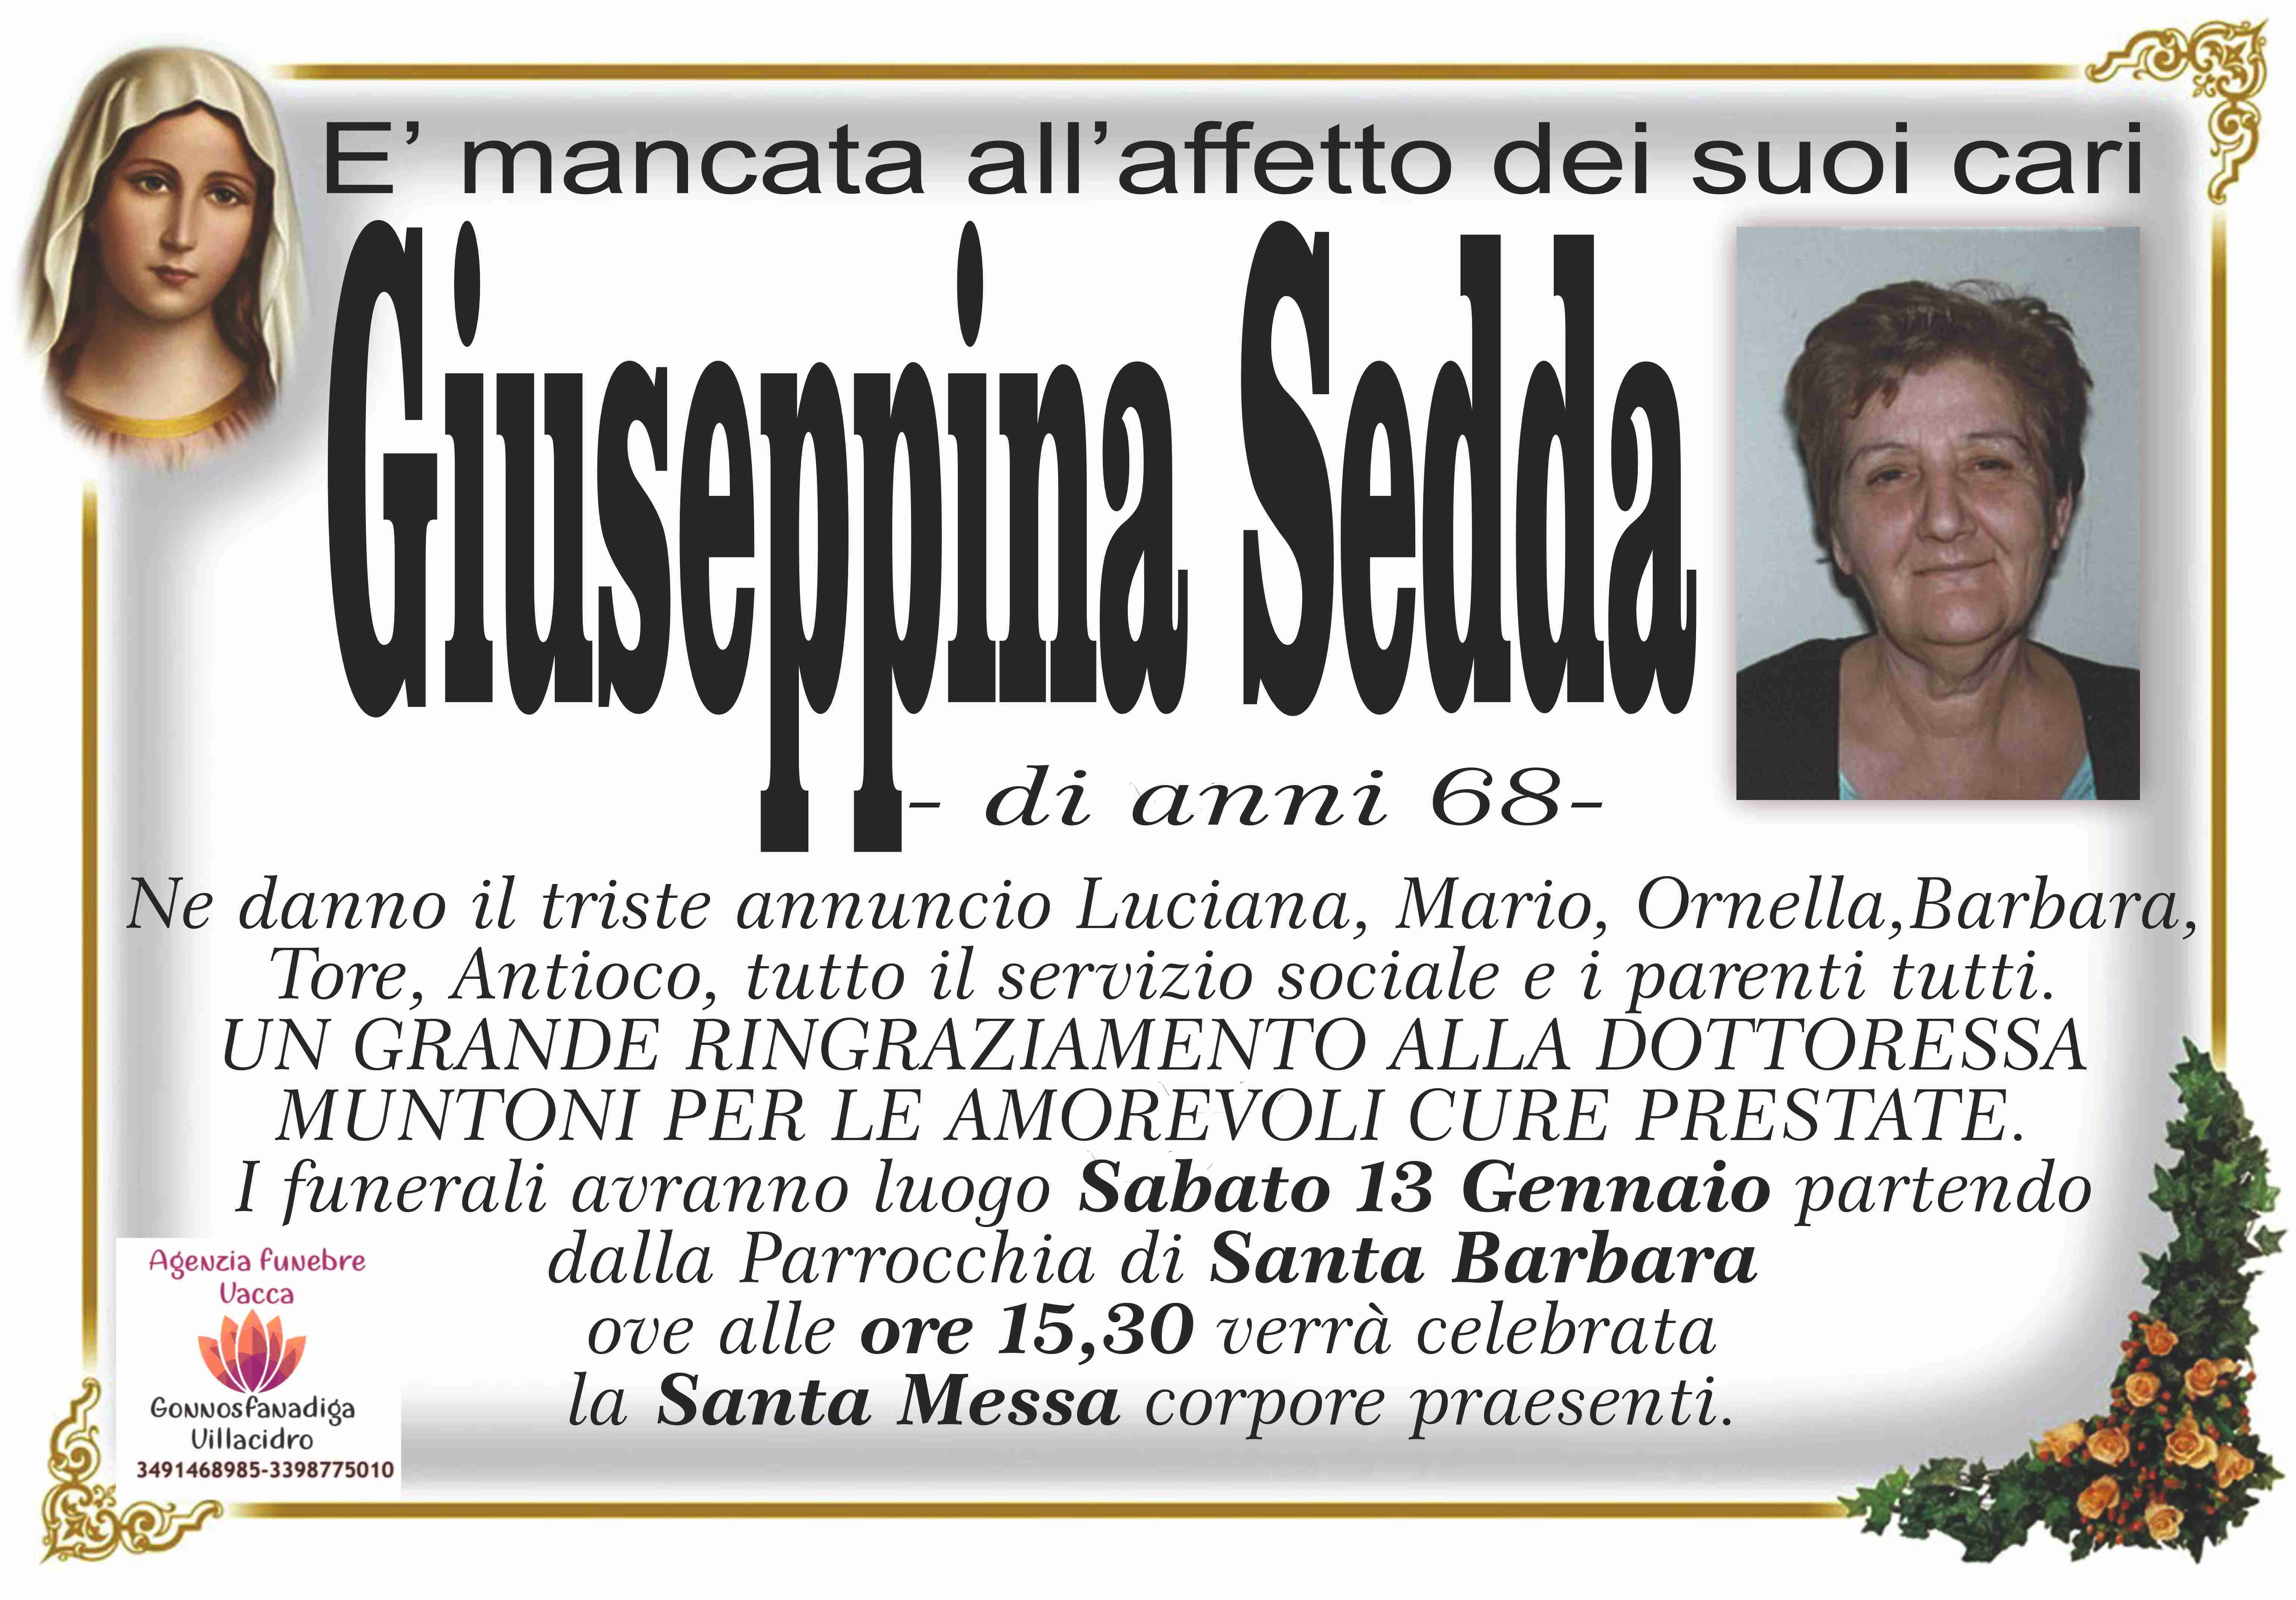 Giuseppina Sedda